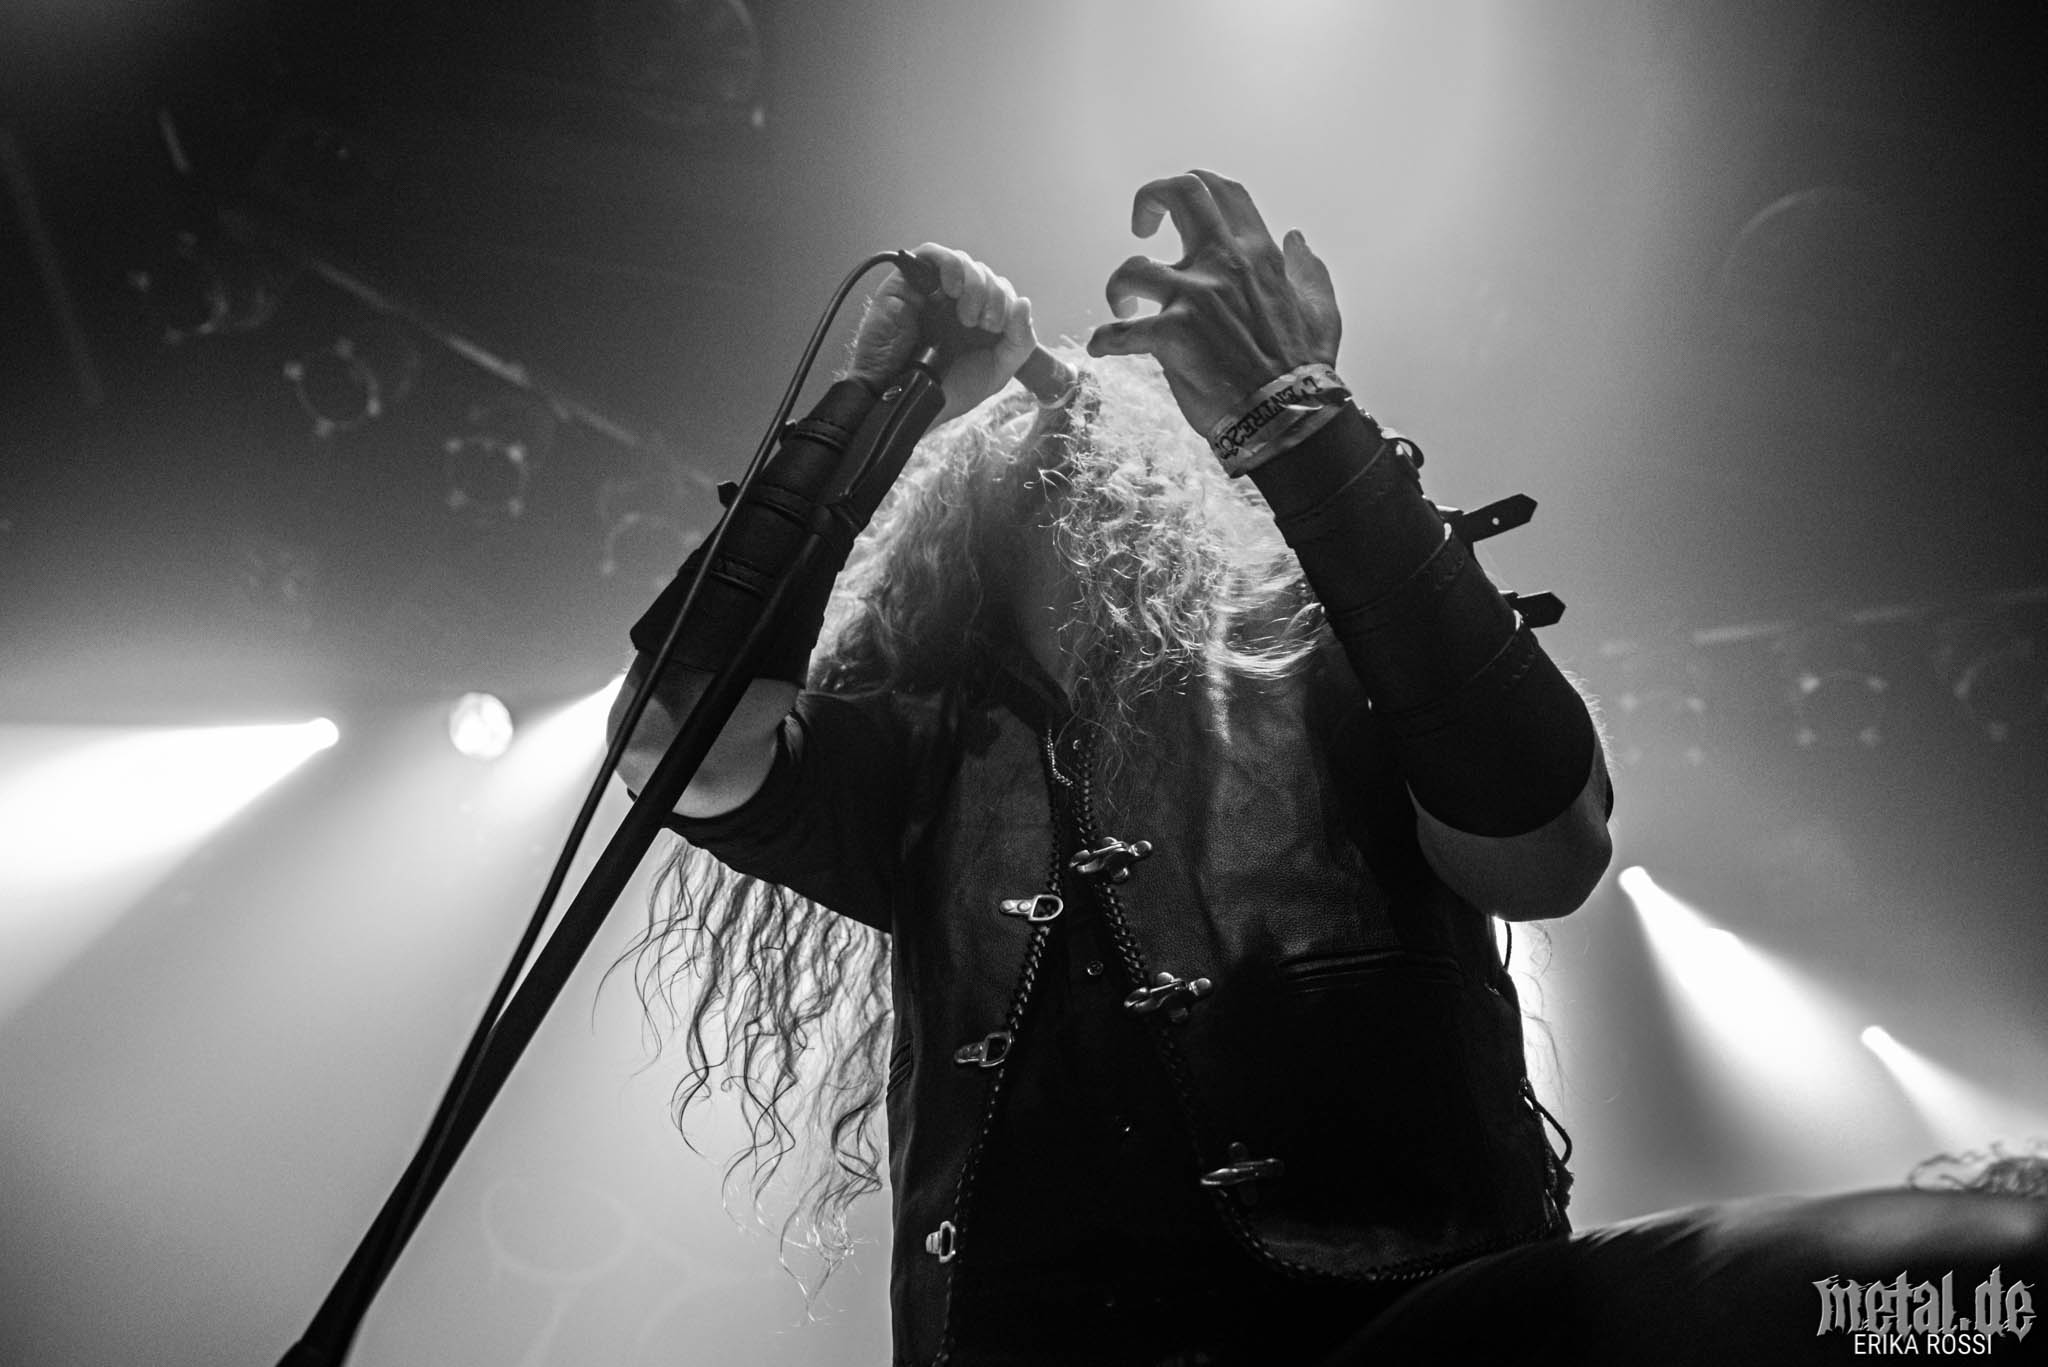 Imperium Dekadenz Interview: New Album 'Into Sorrow Evermore' & More